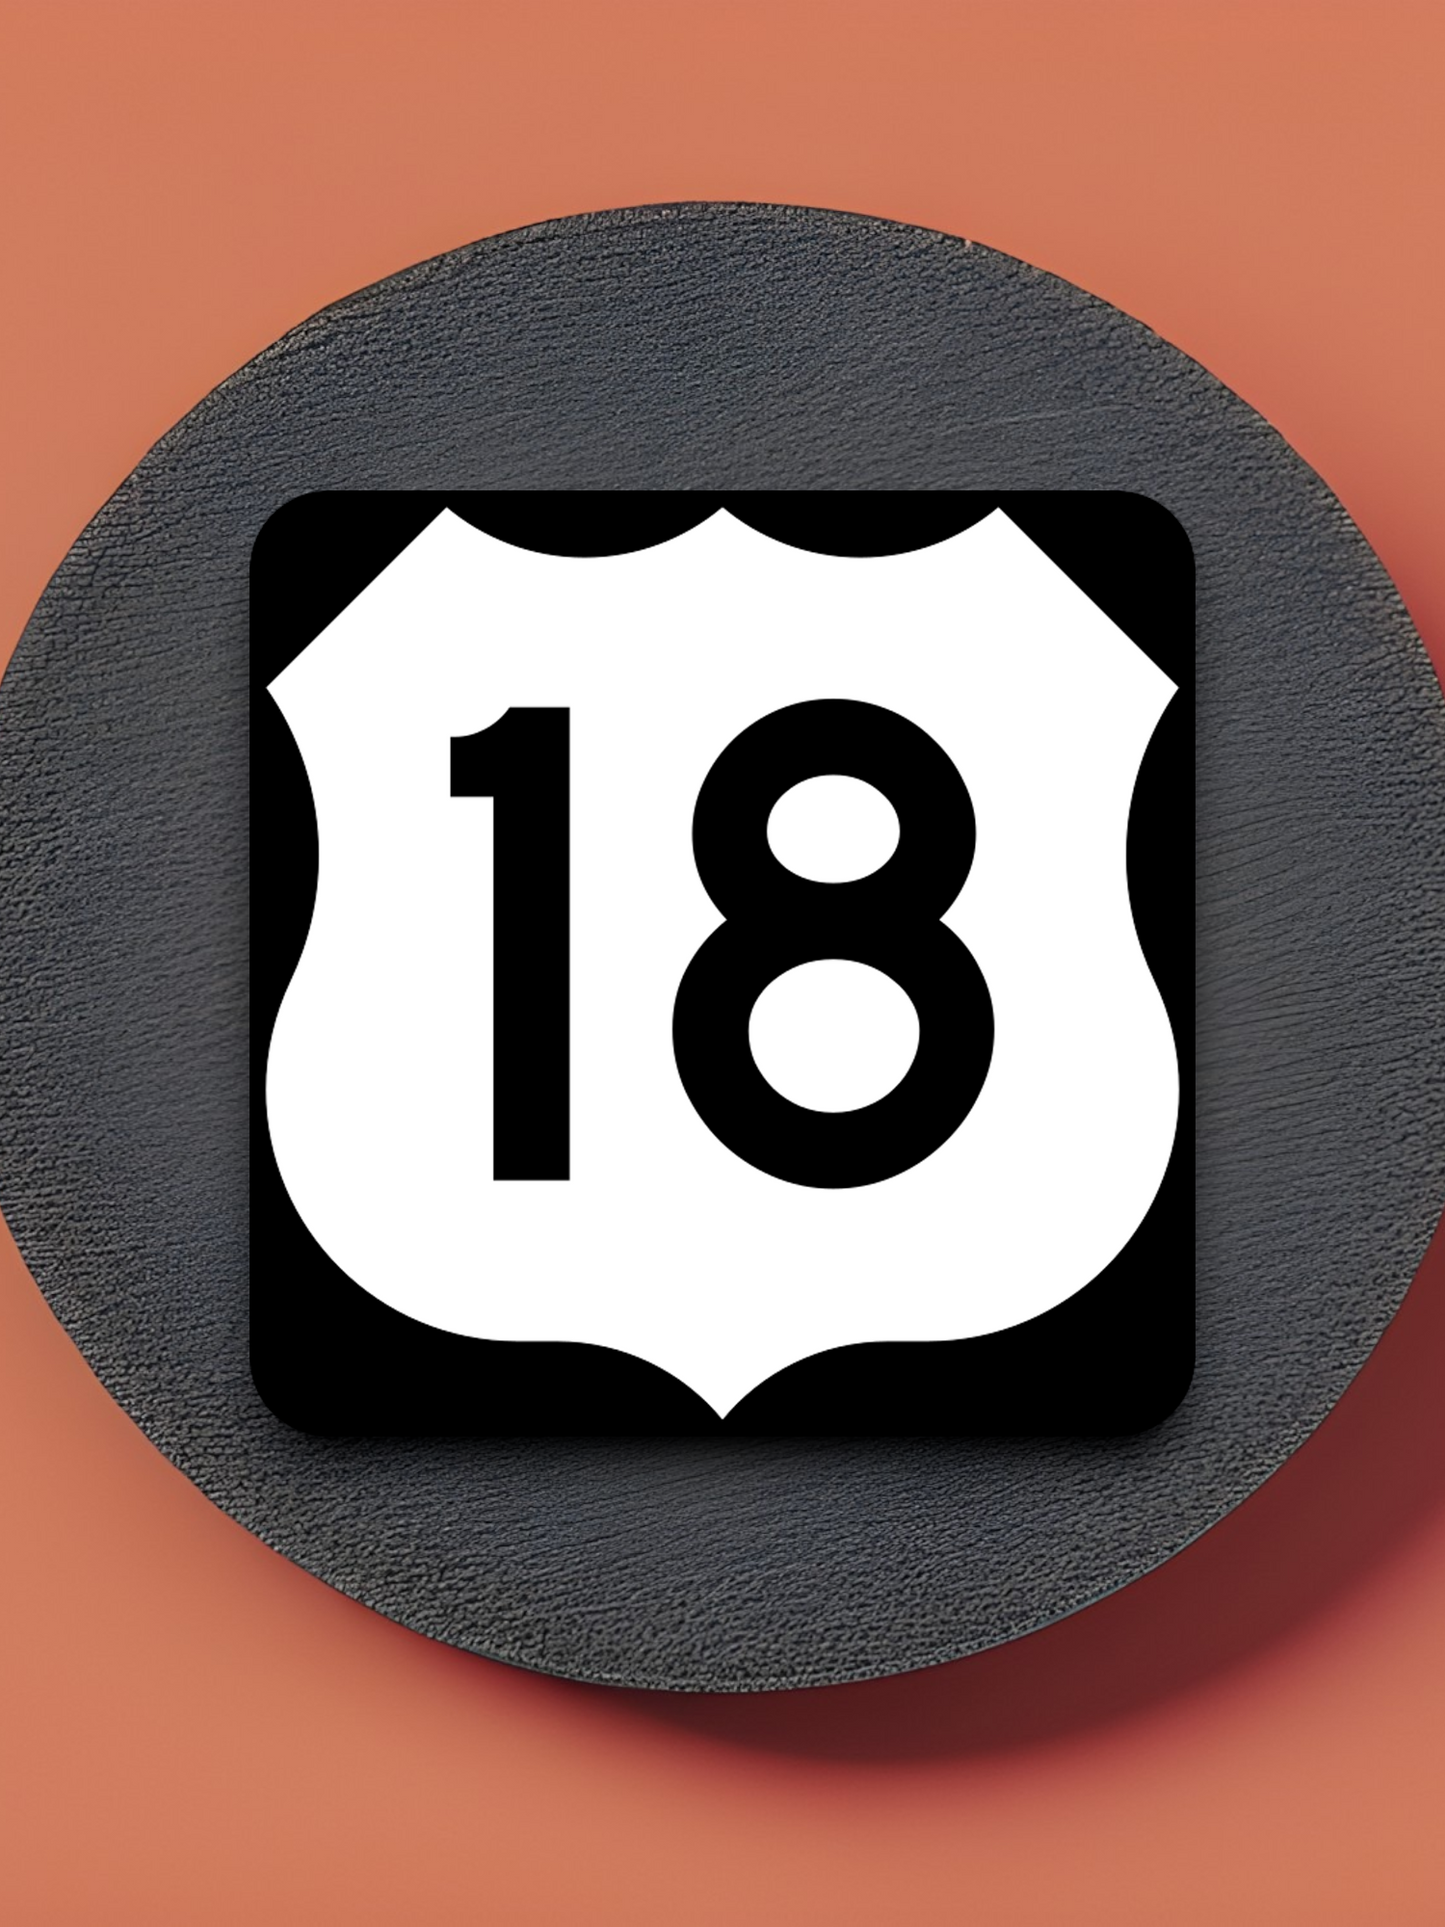 U.S. Route 18 Road Sign Sticker